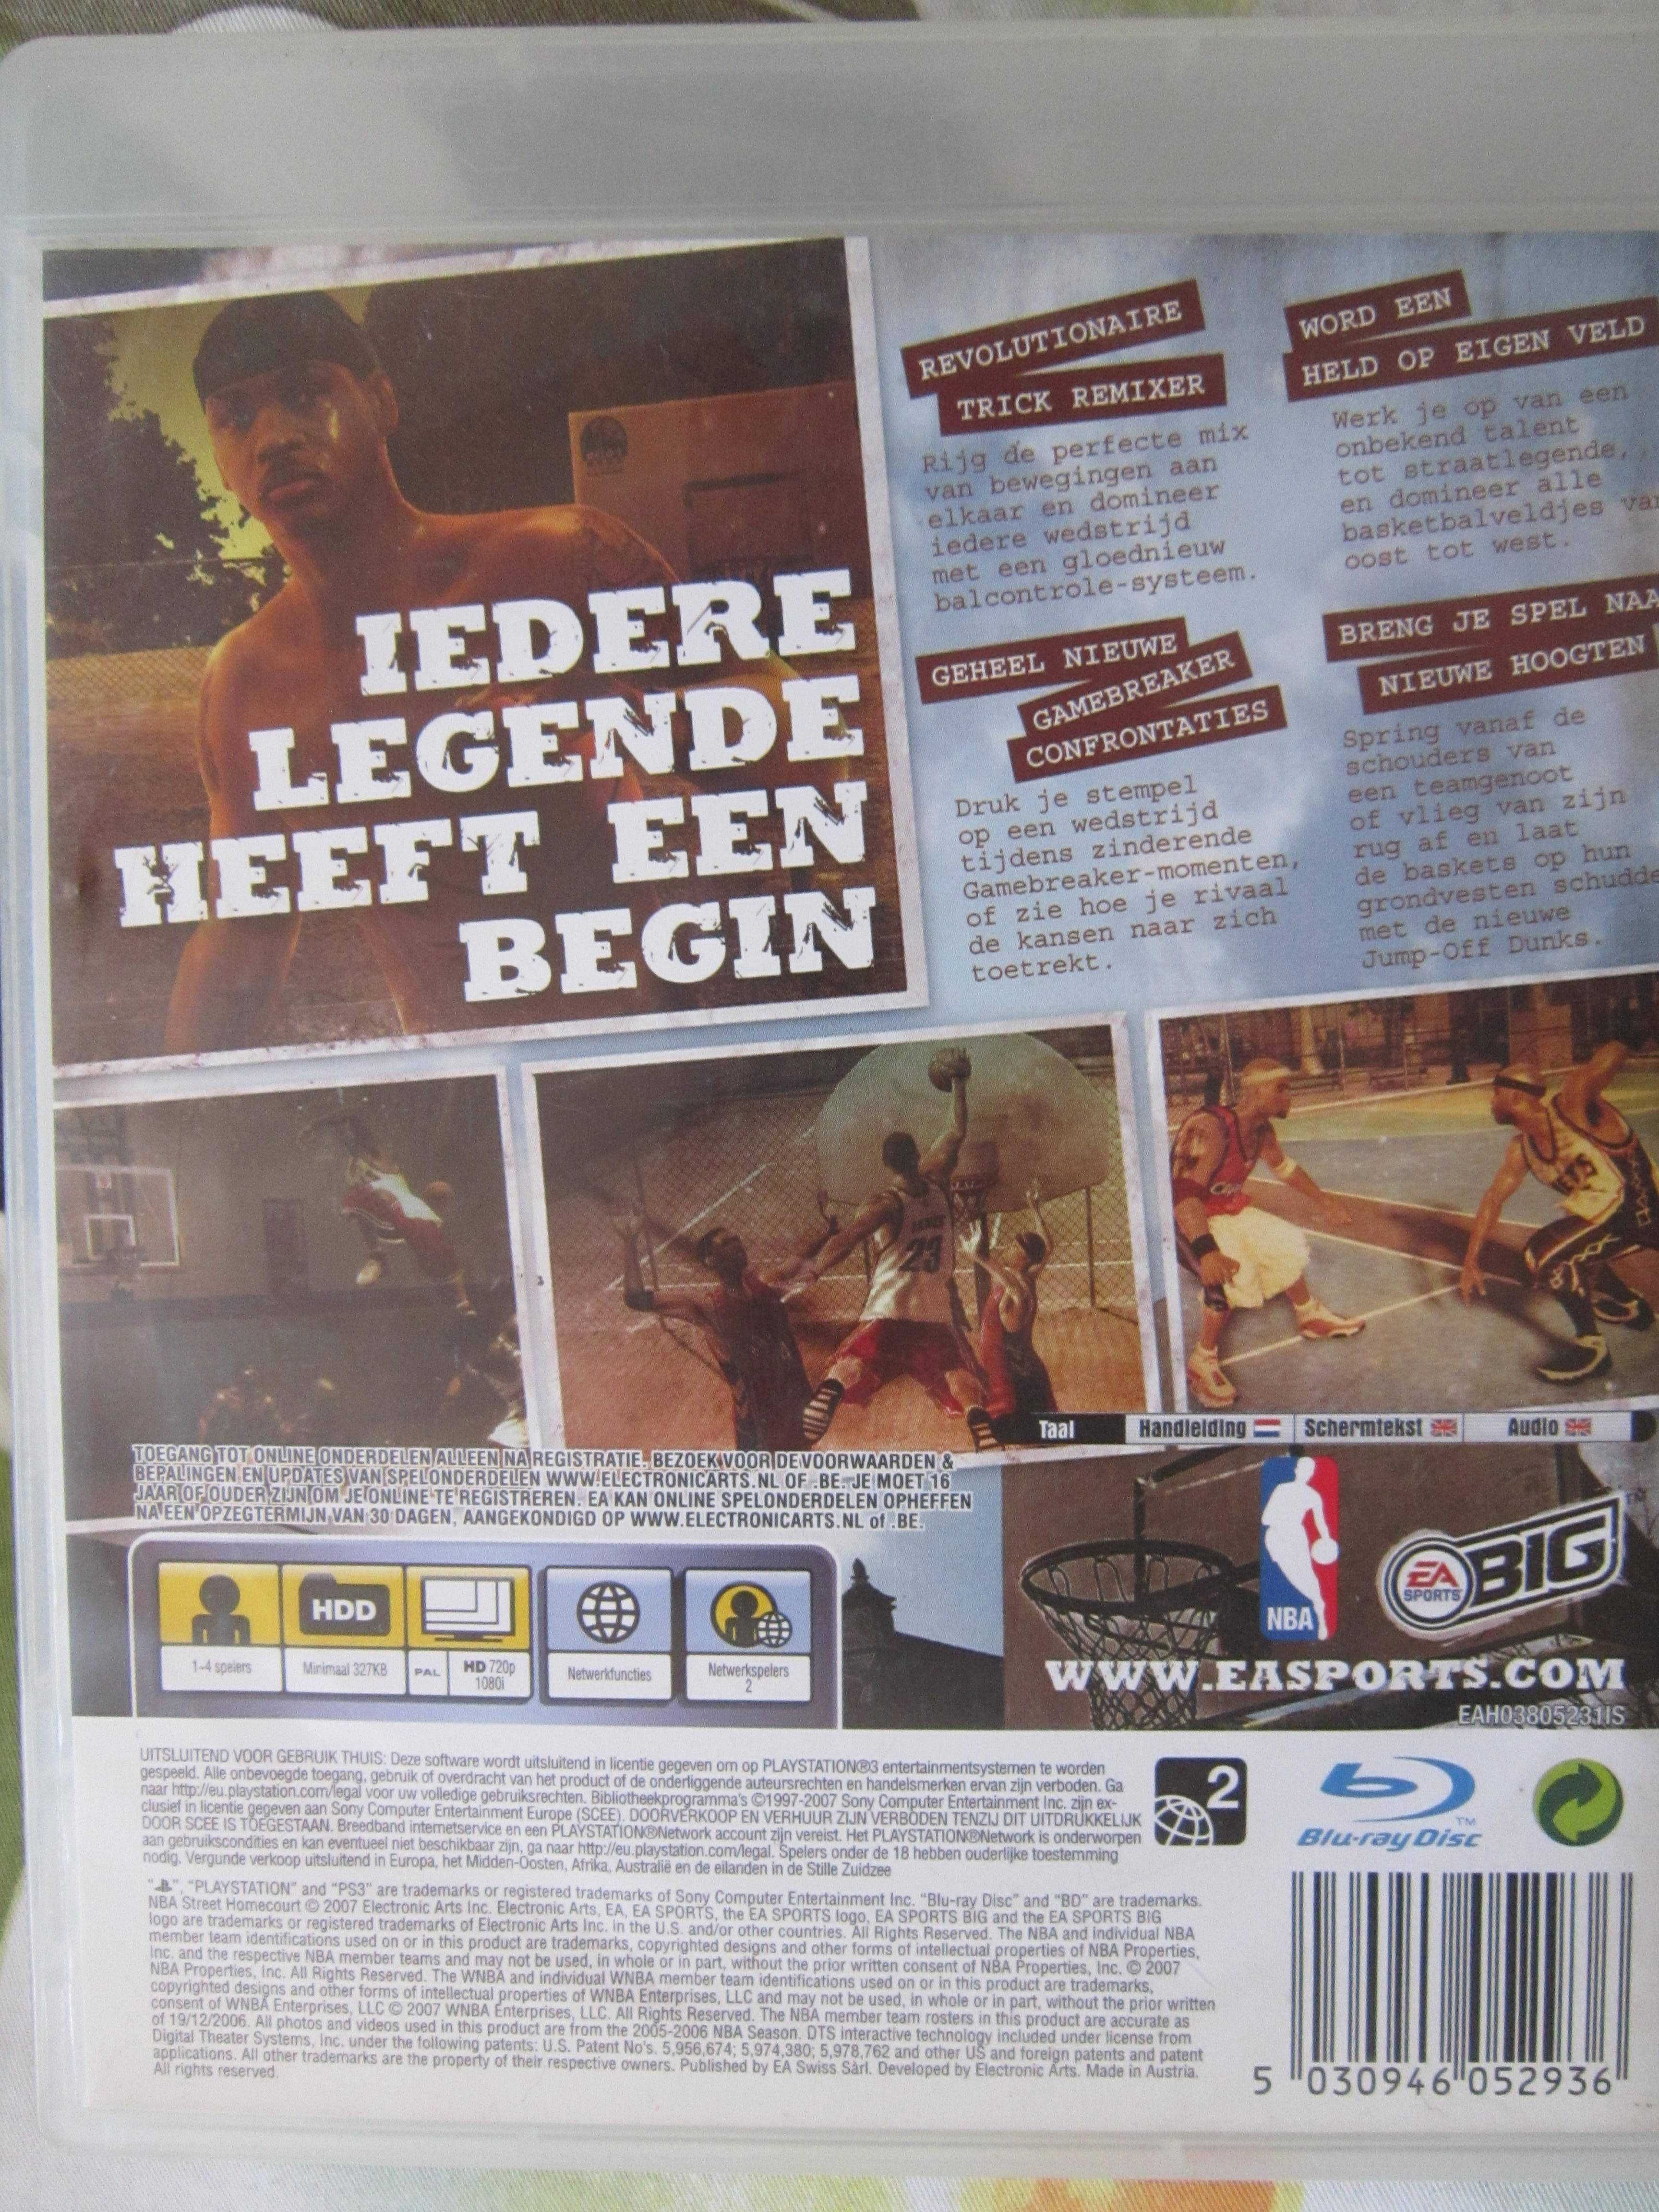 Nba street homecourt Sports Champions+ 10 других игр на PS3 пс3!